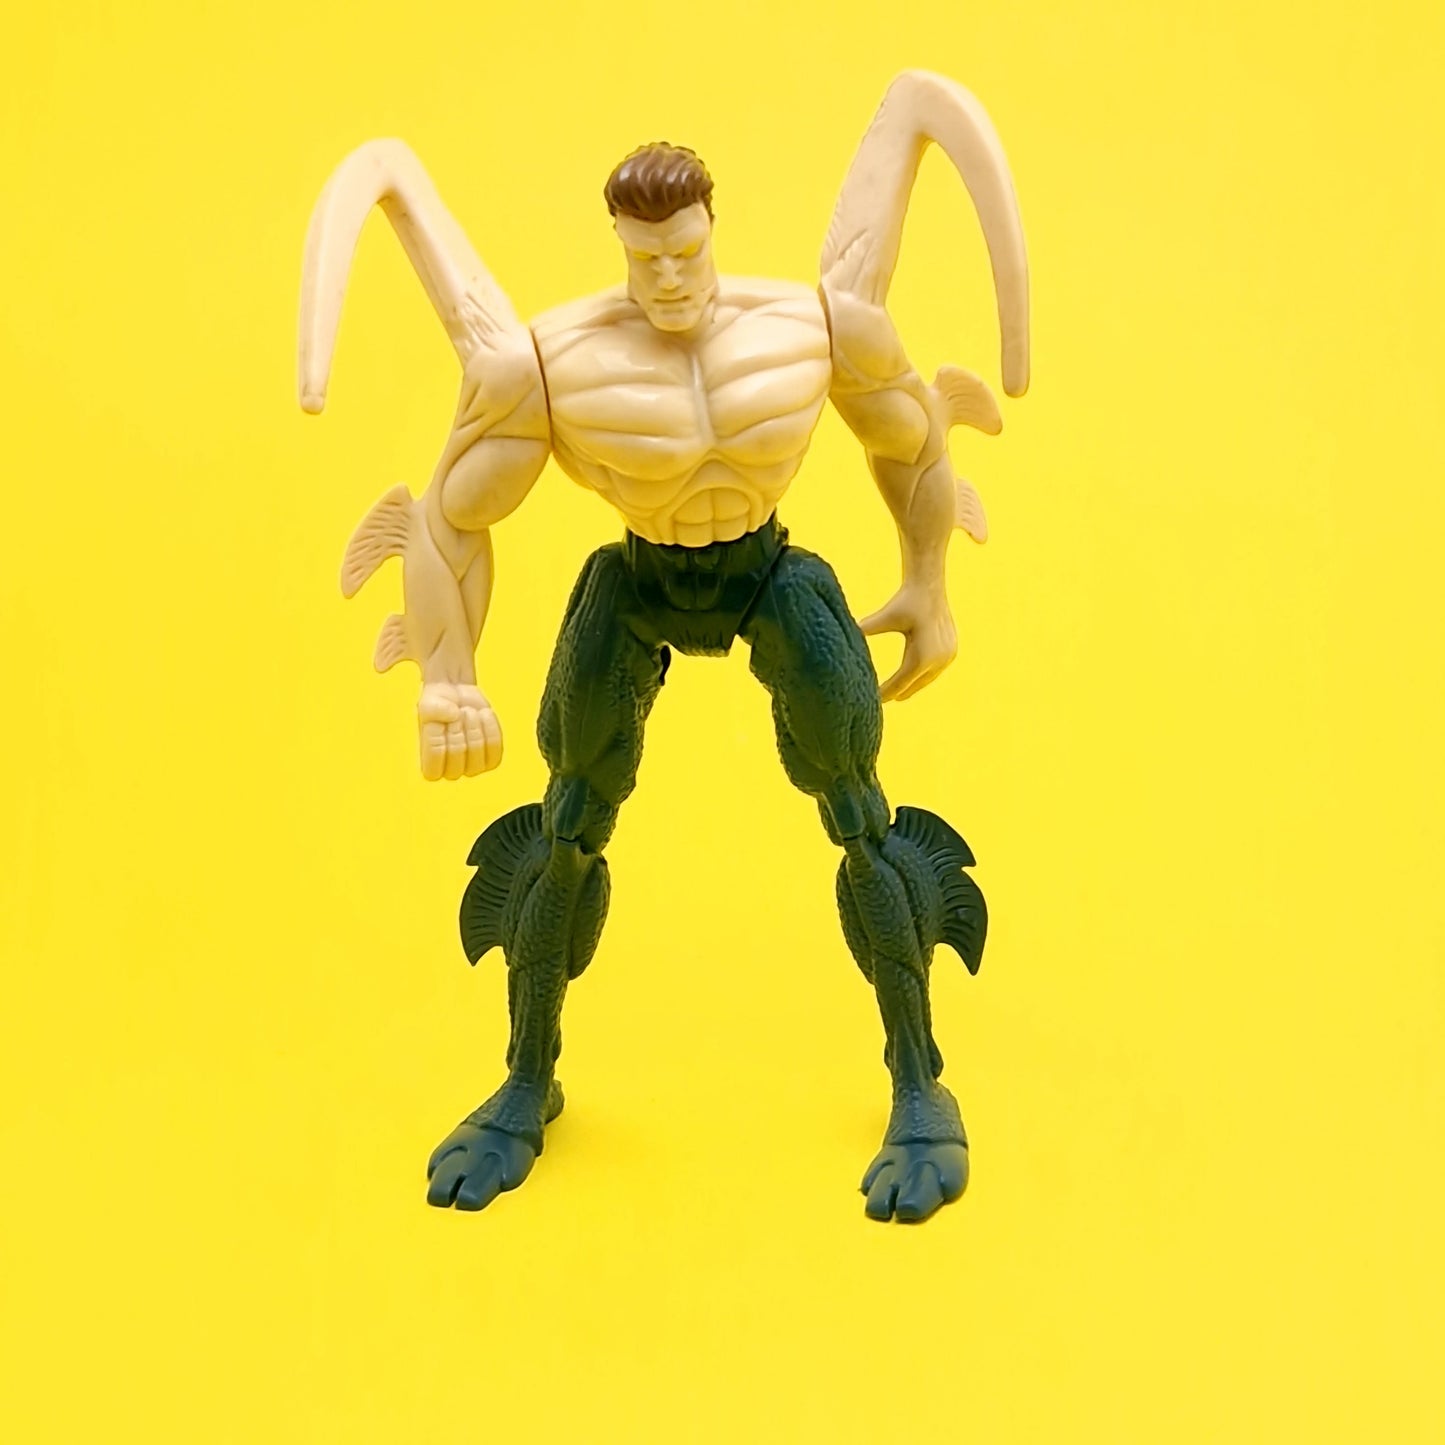 SPIDER-MAN ☆ Vintage SMYTHE & SPIDERMAN The Animated Series Figure ☆ Original Toybiz